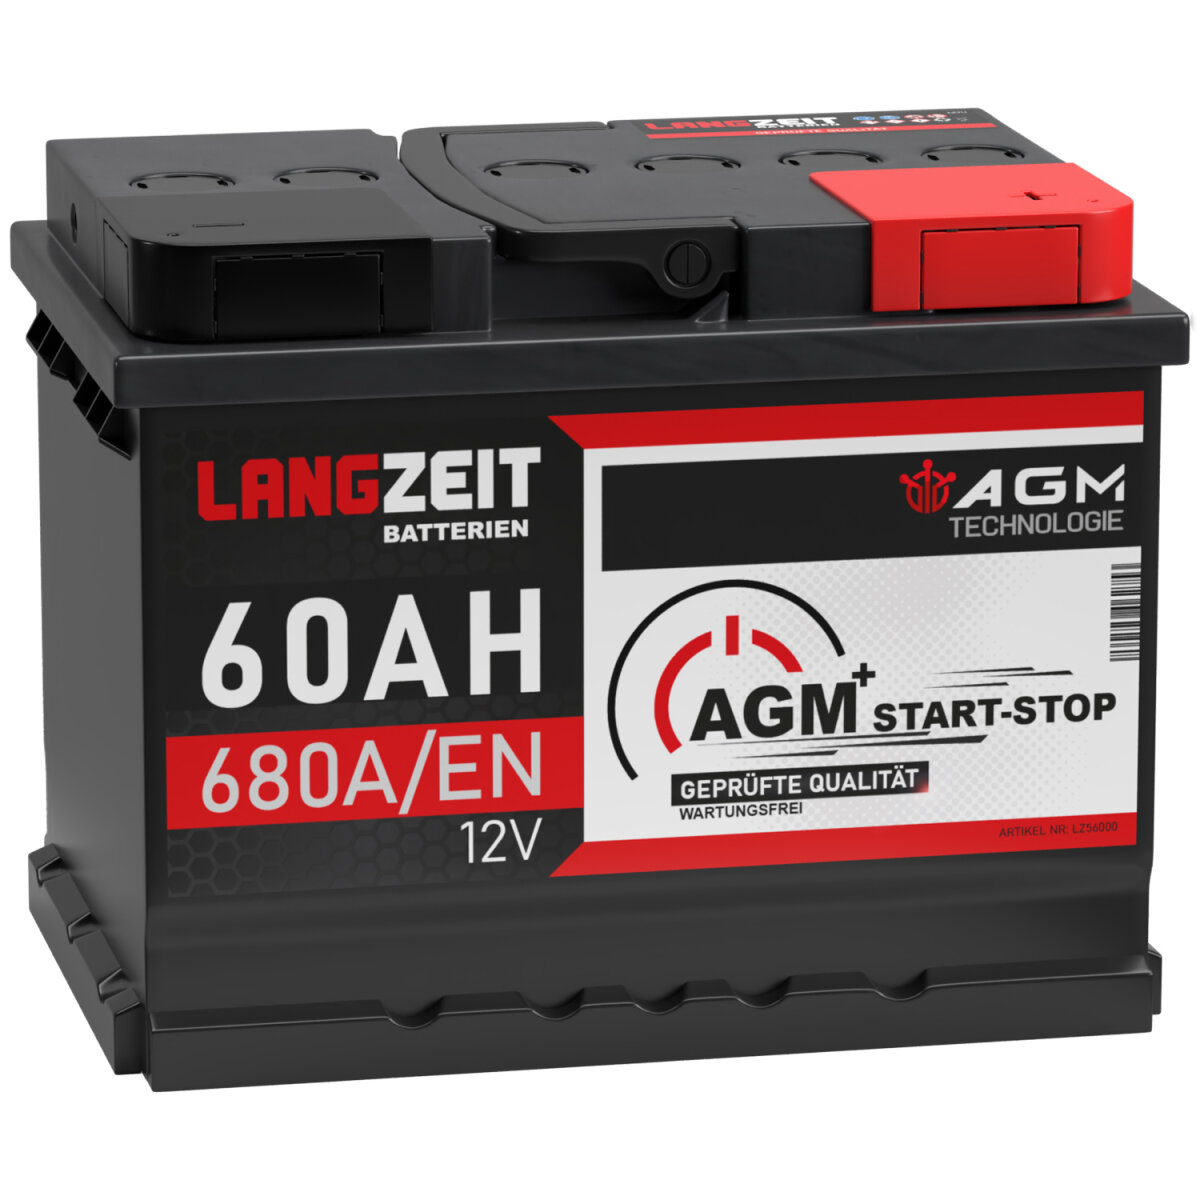 Langzeit AGM+ Batterie 60Ah 12V, 103,90 €